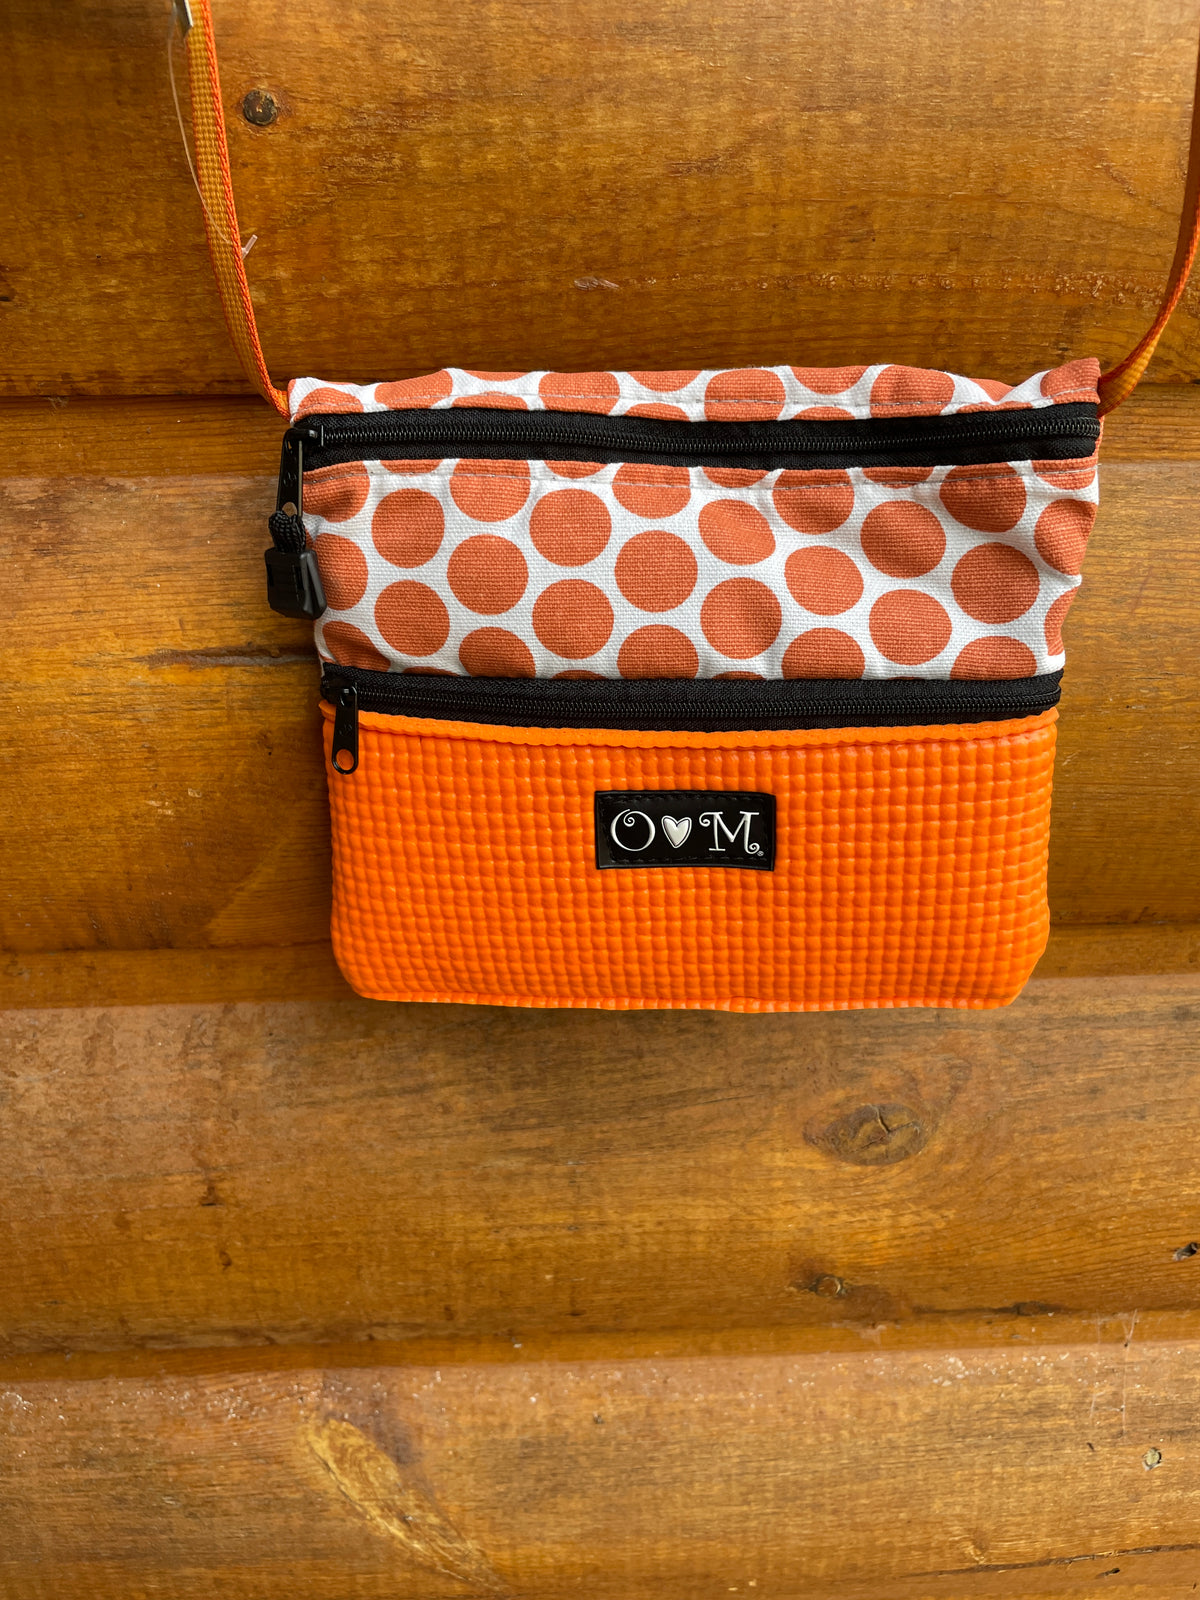 3 Zip Bag Orange-Polka Dot Print Fabric